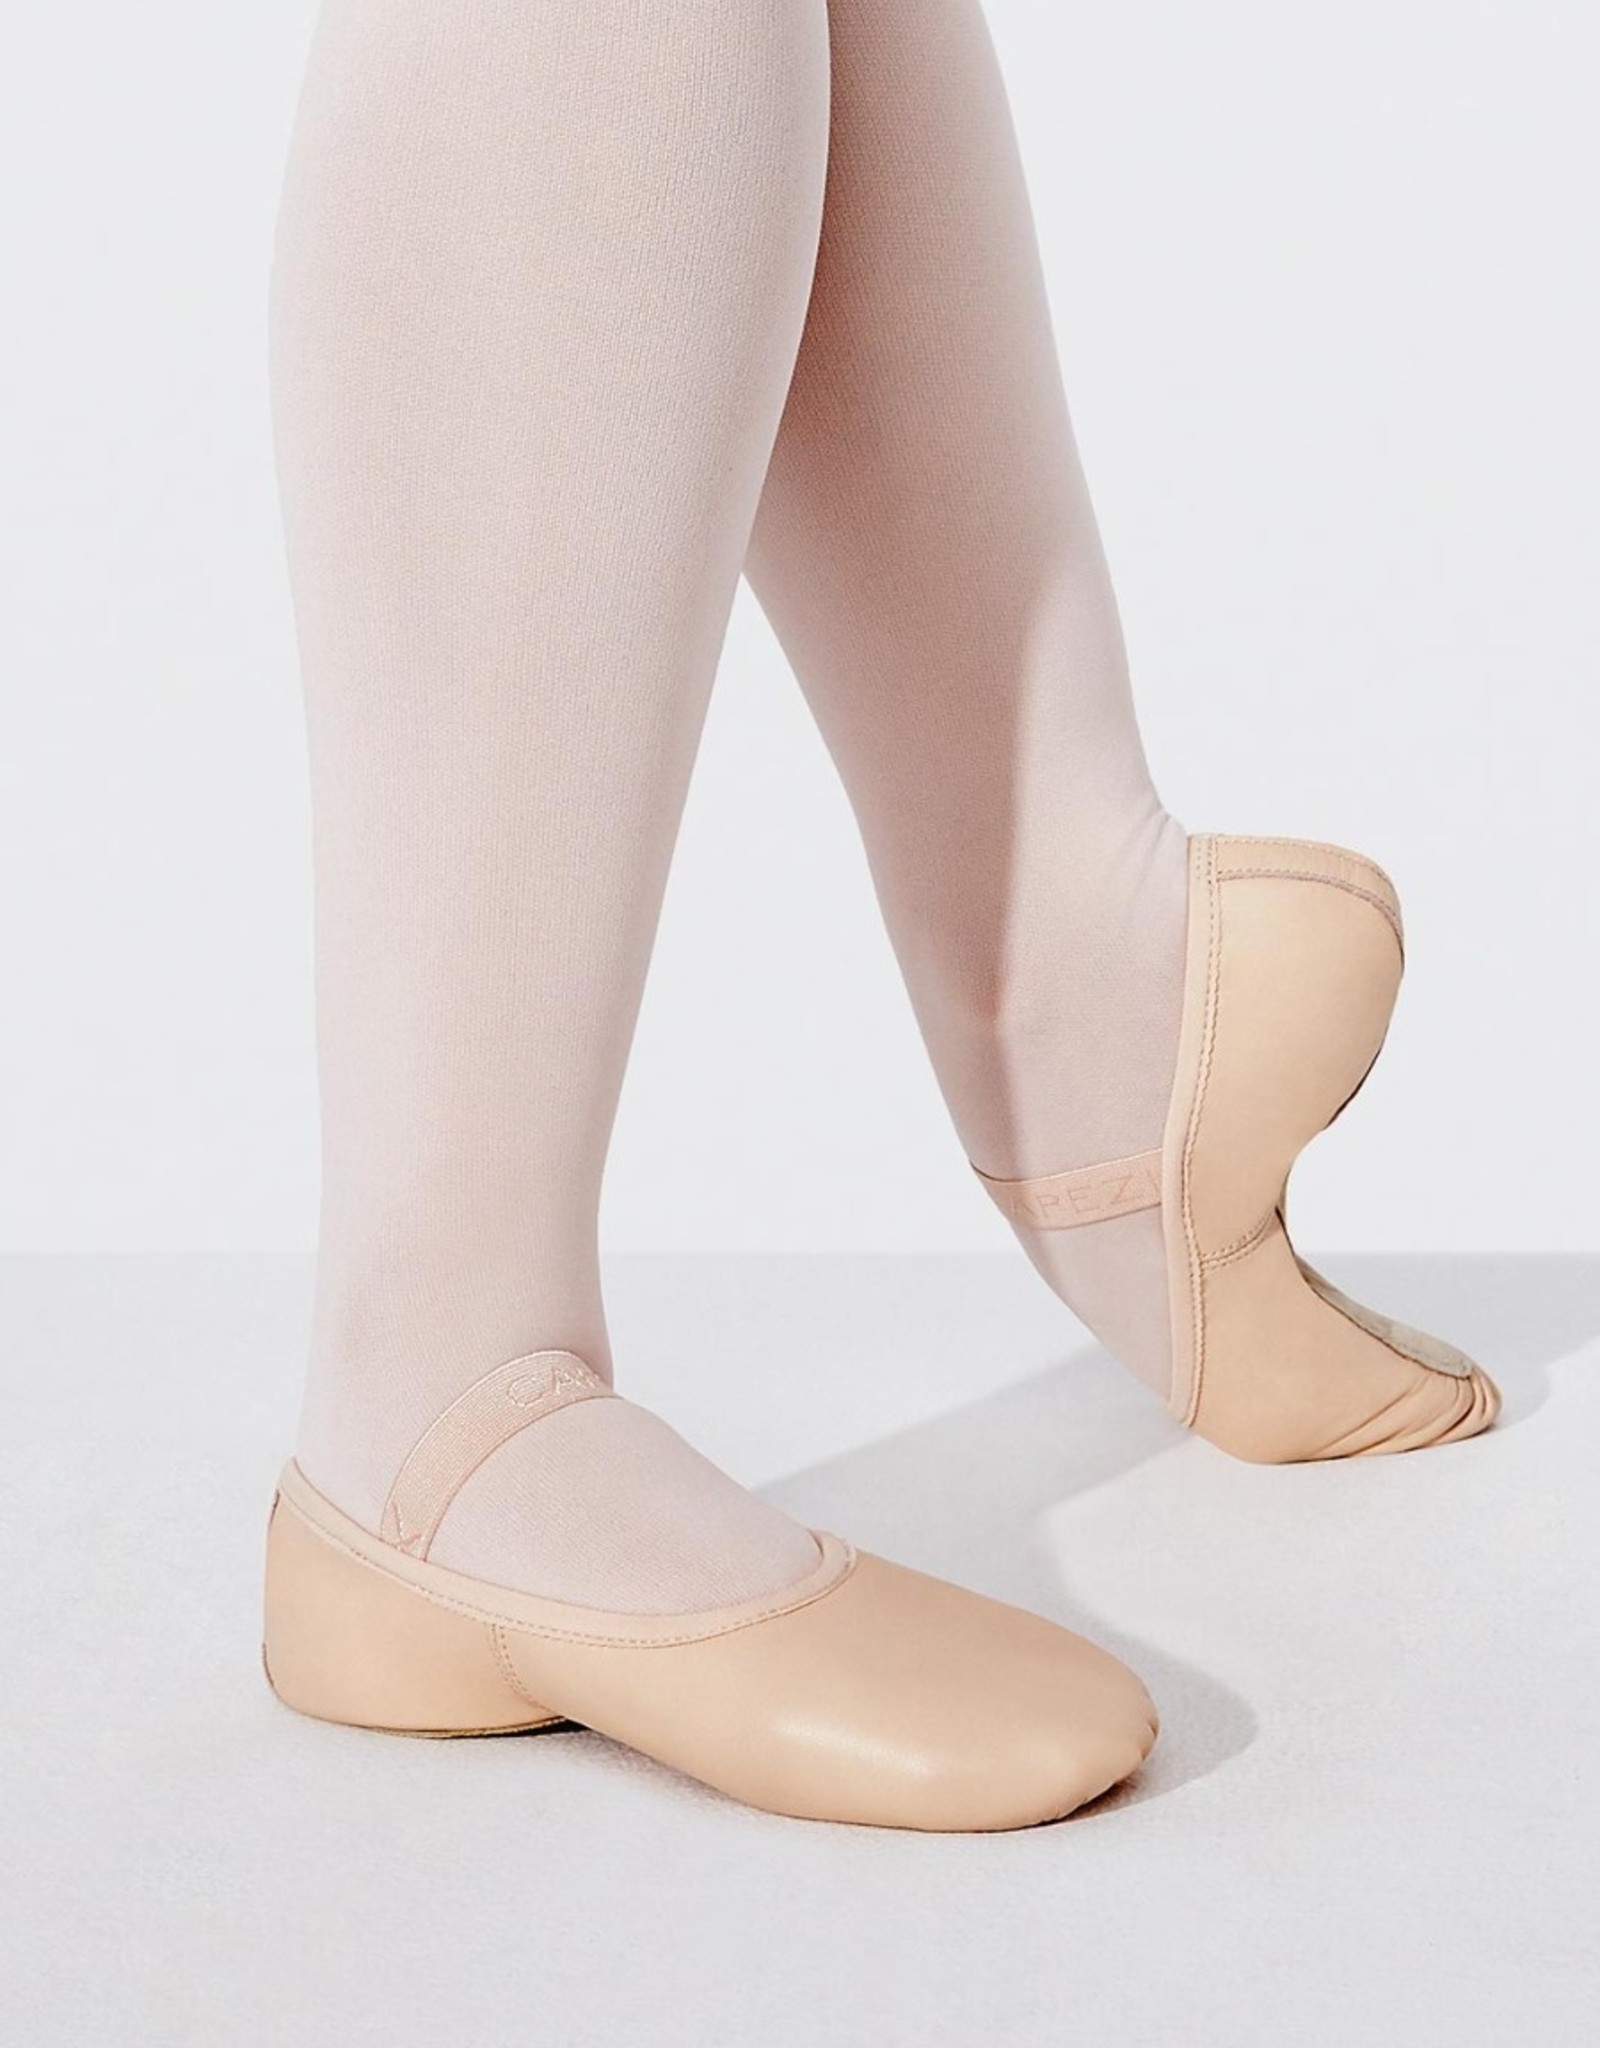 Capezio Capezio Lily Ballet Shoe